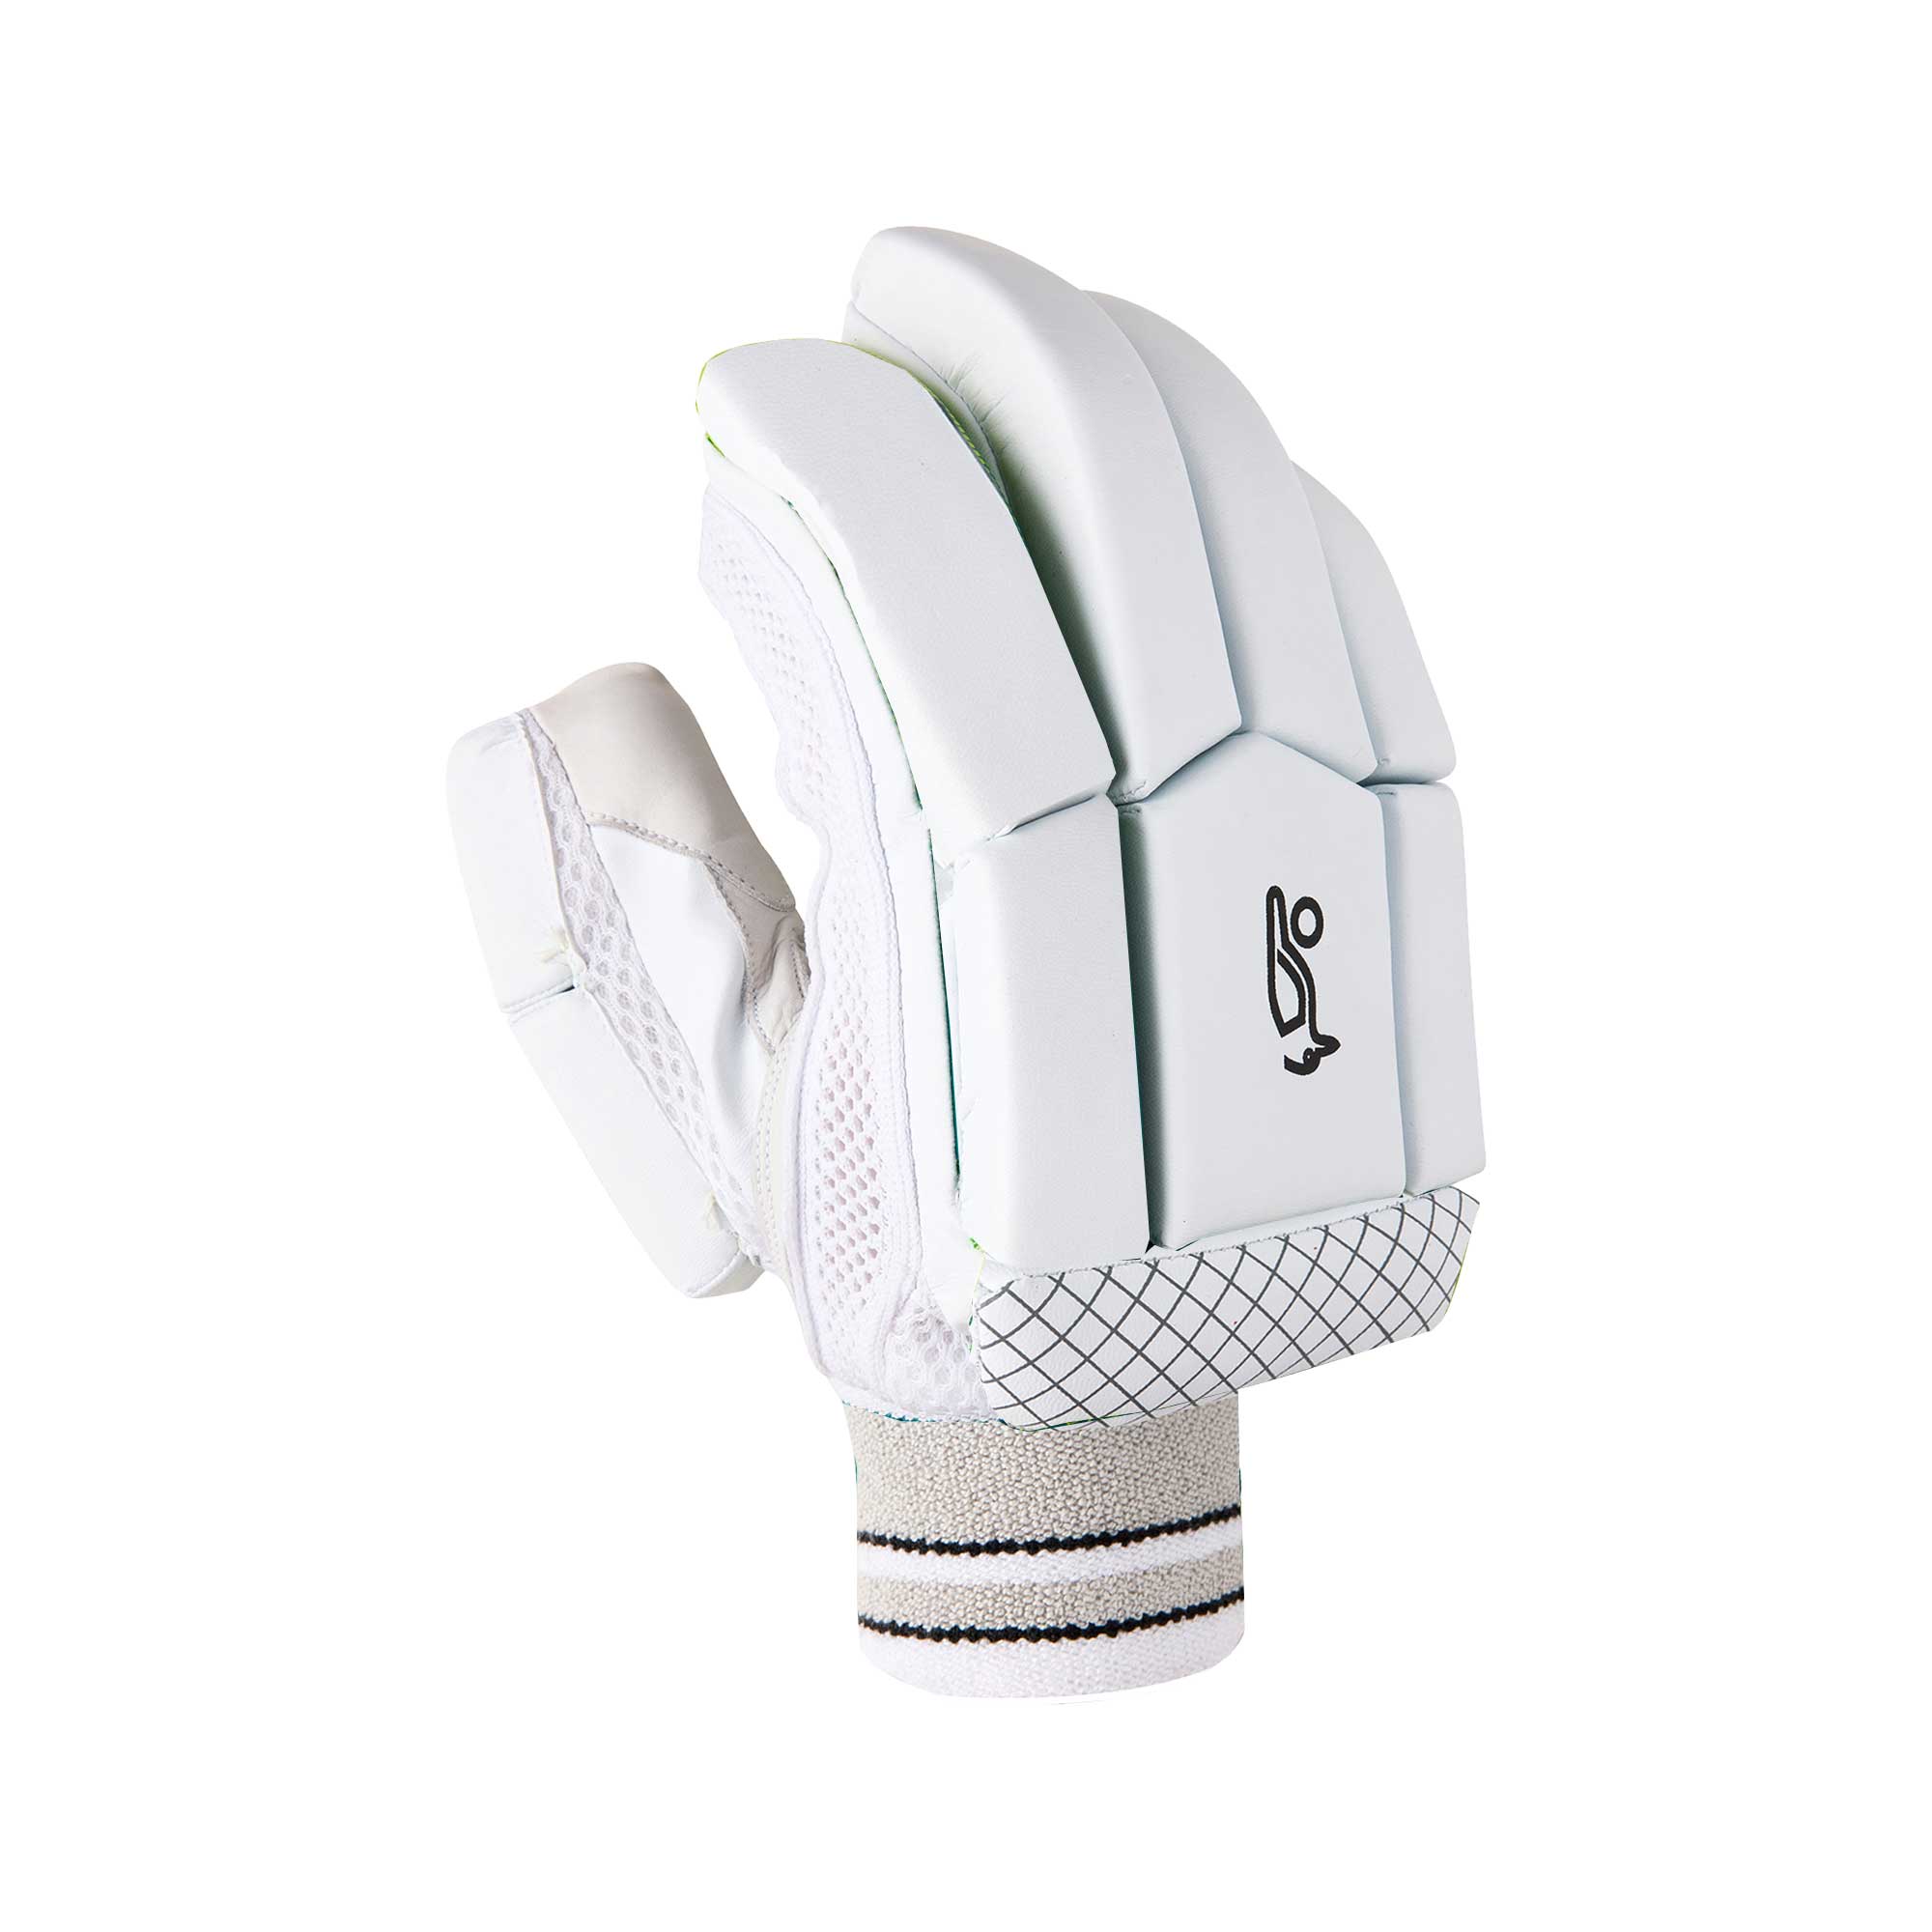 Kookaburra Ghost Pro 5.0 Cricket Batting Gloves